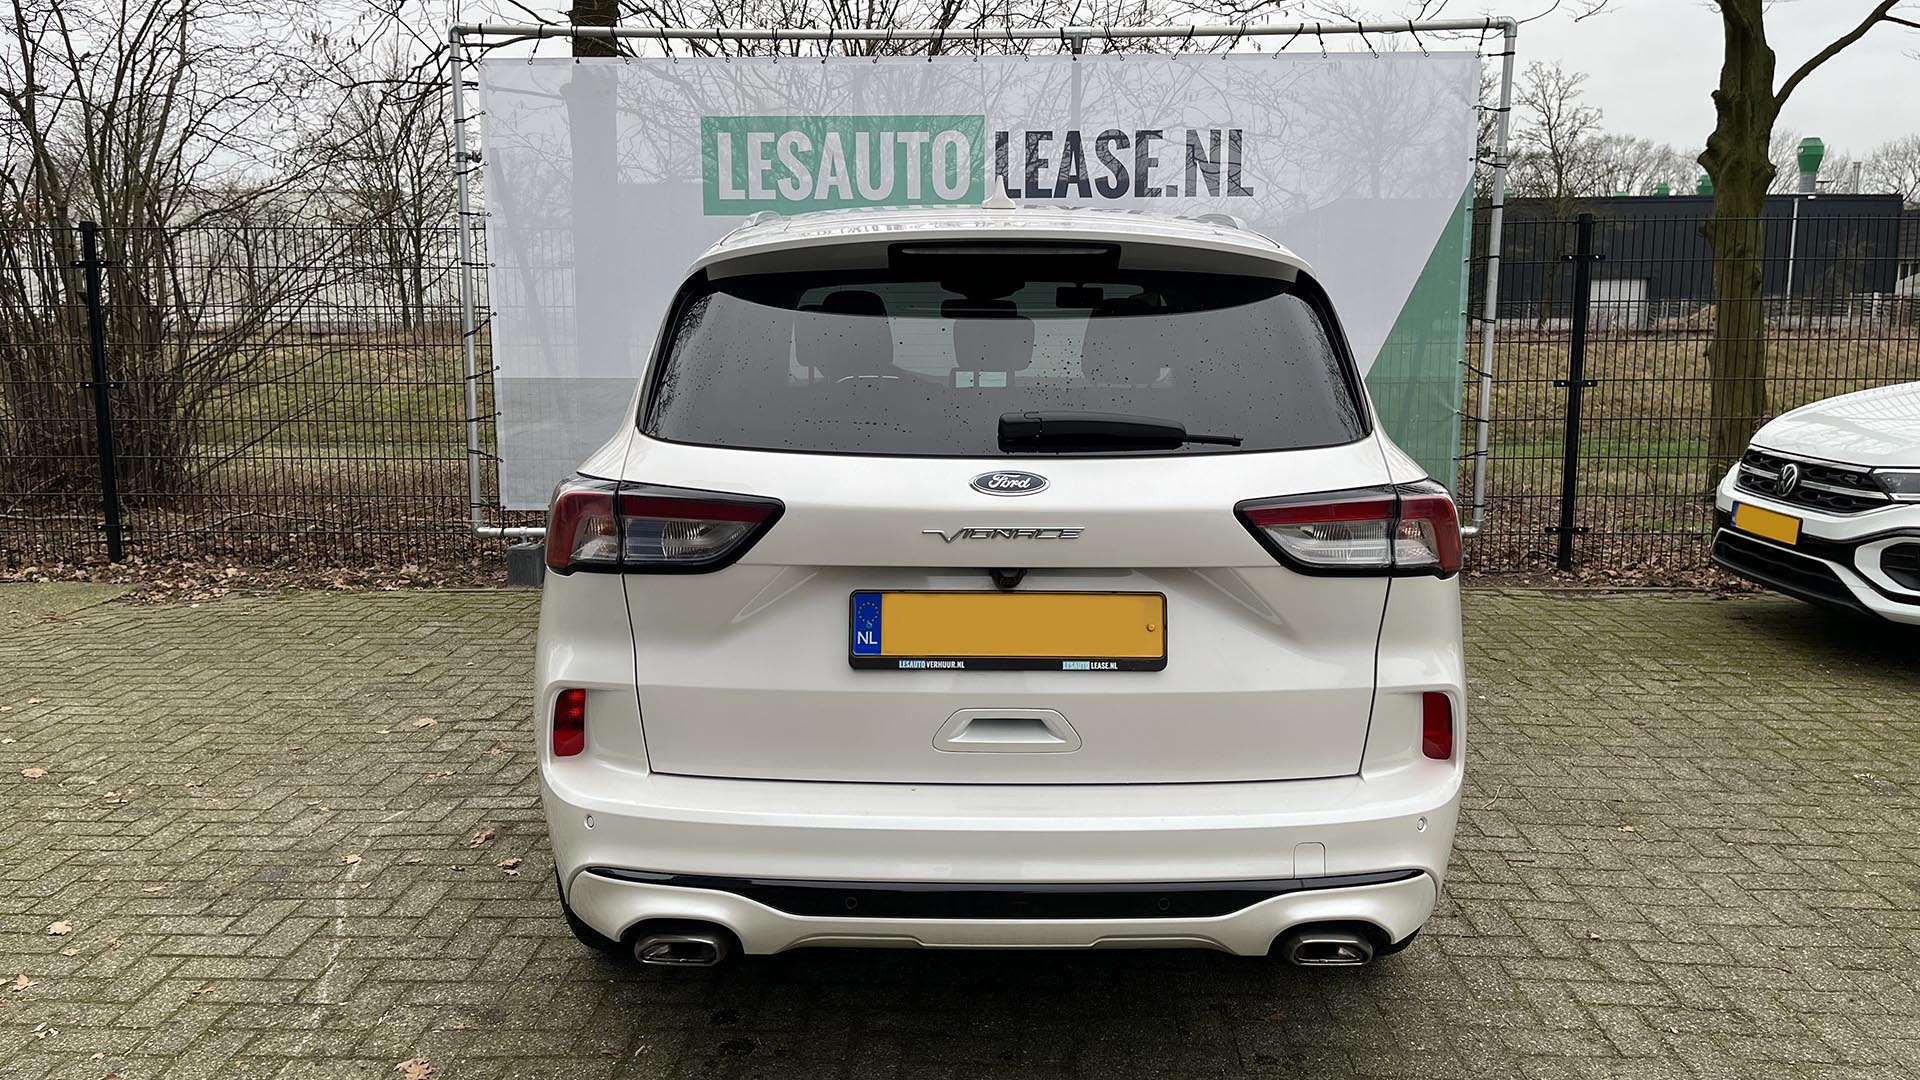 Ford Kuga - Lesautolease.nl